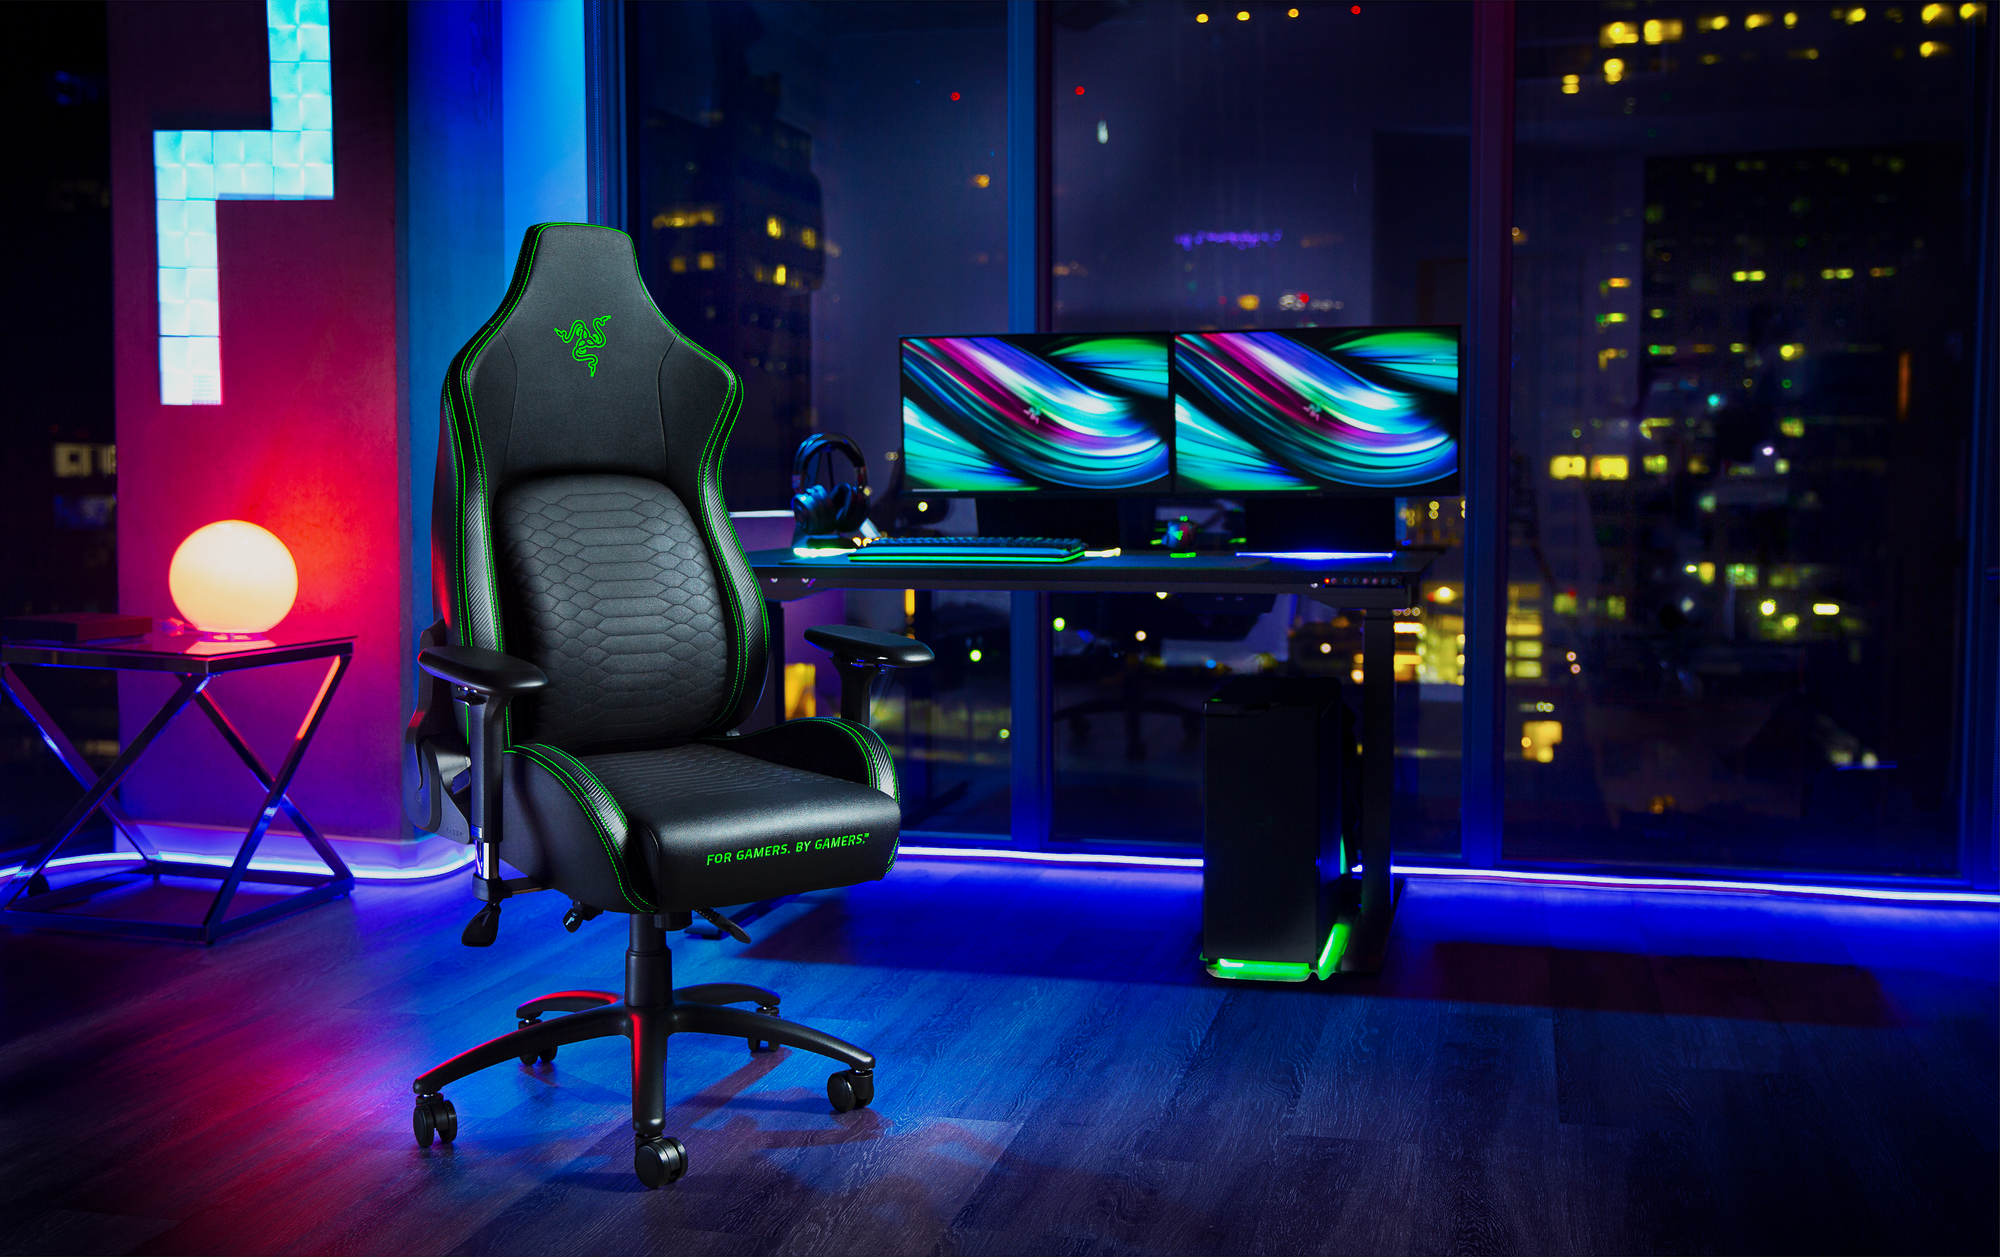 Razer's gaming chair